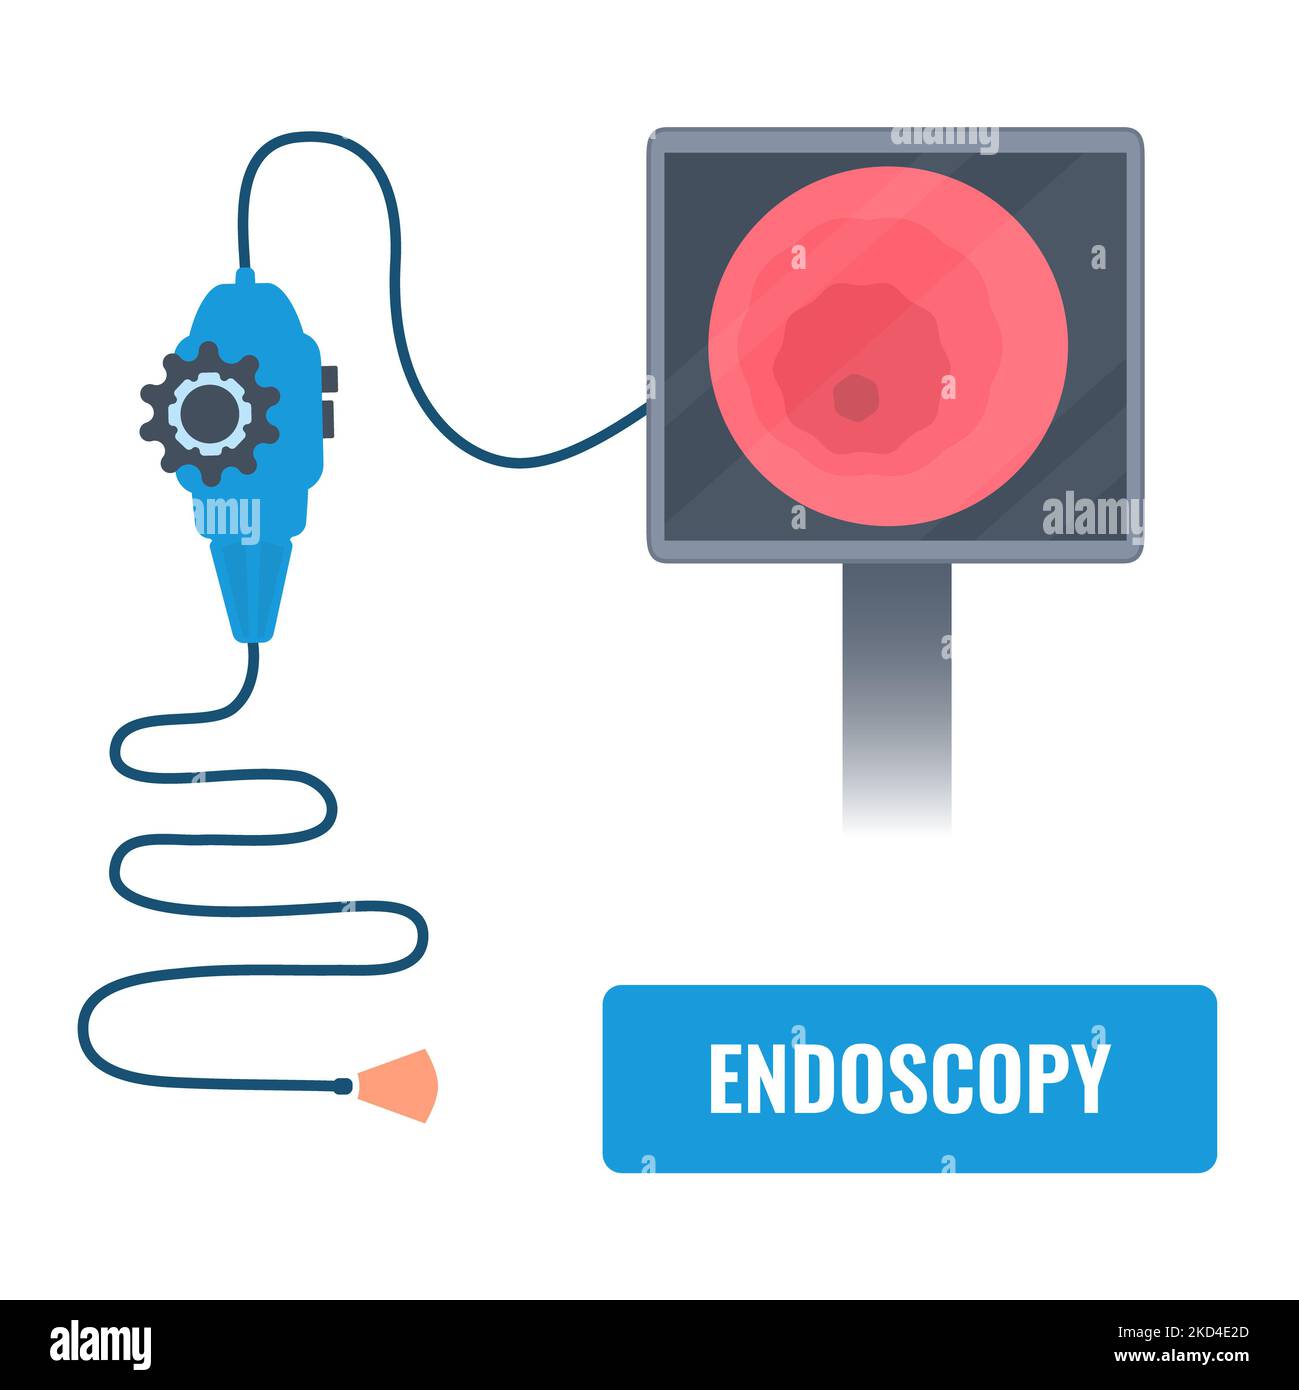 Endoscopy equipment, illustration Stock Photo